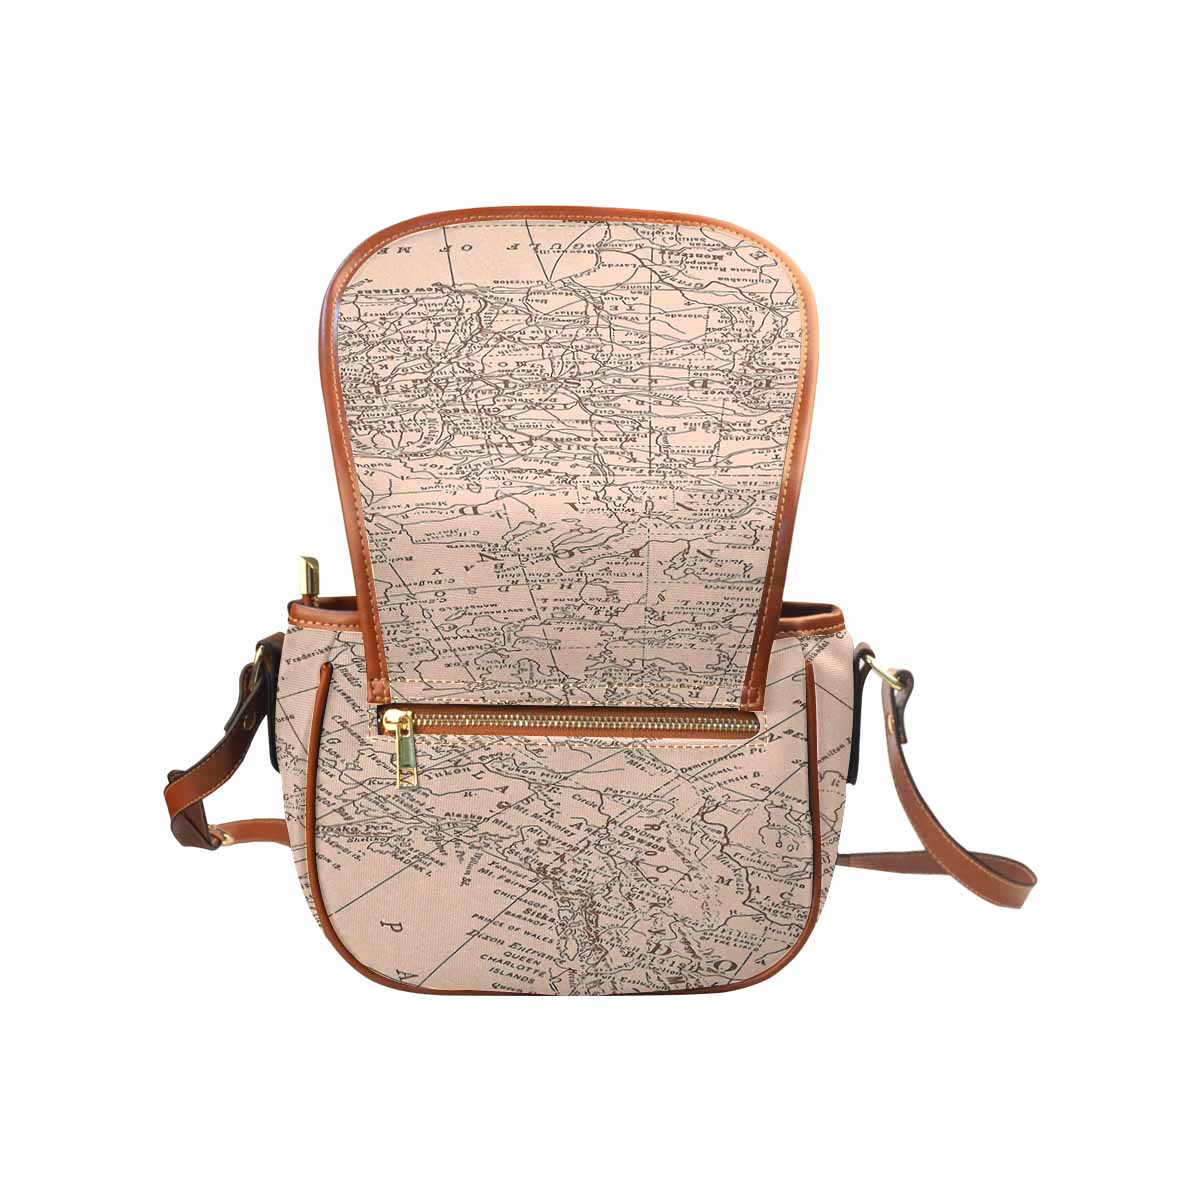 Antique Map design Handbag, saddle bag, Design 53